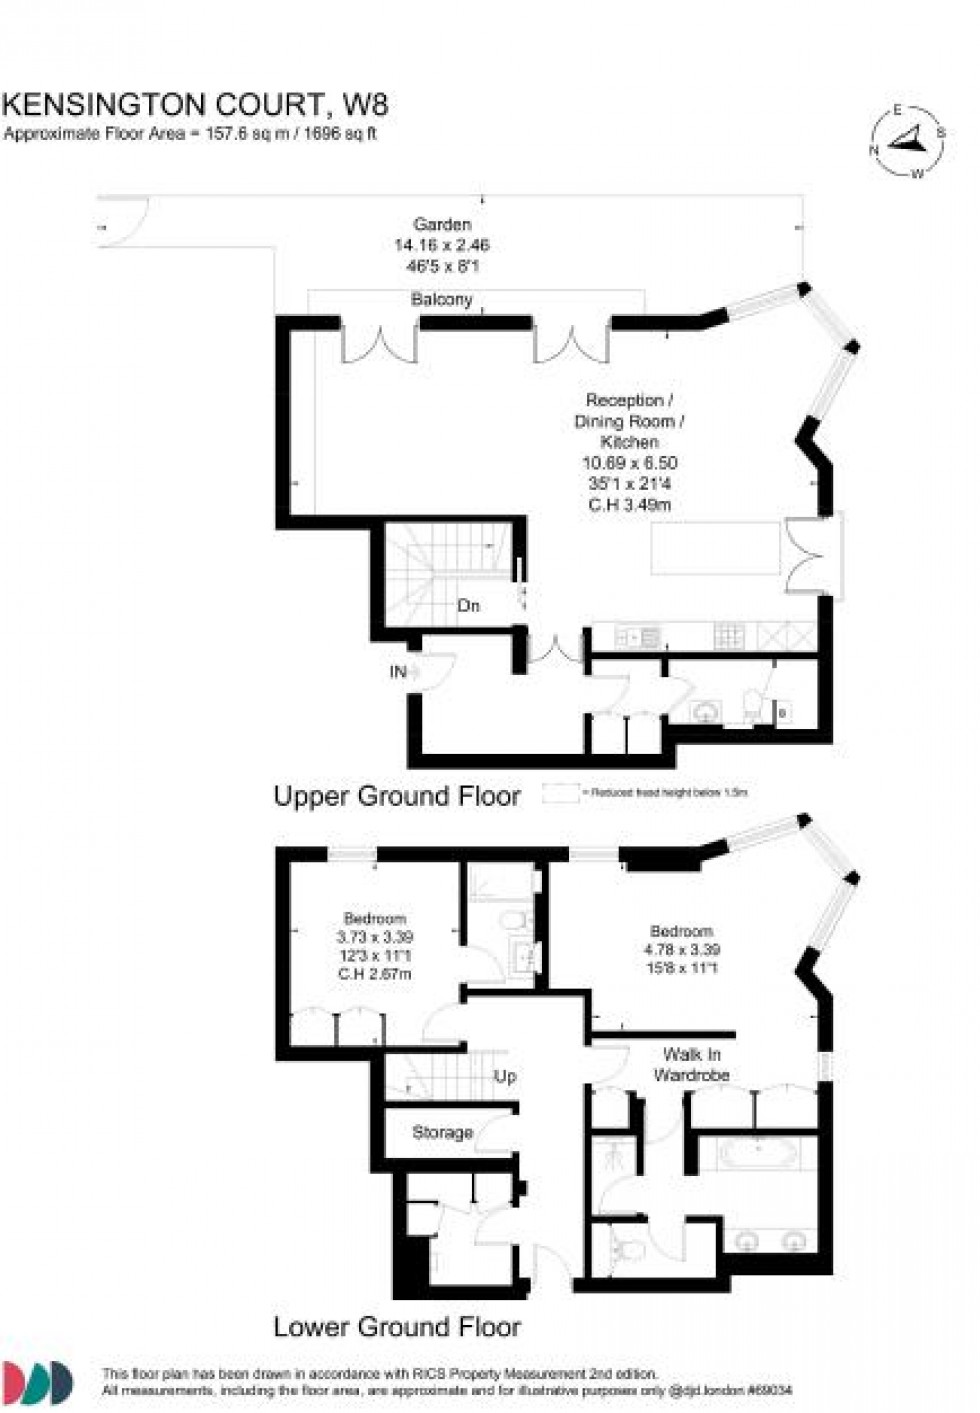 Floorplan for Kensington Court, Kensington,W8